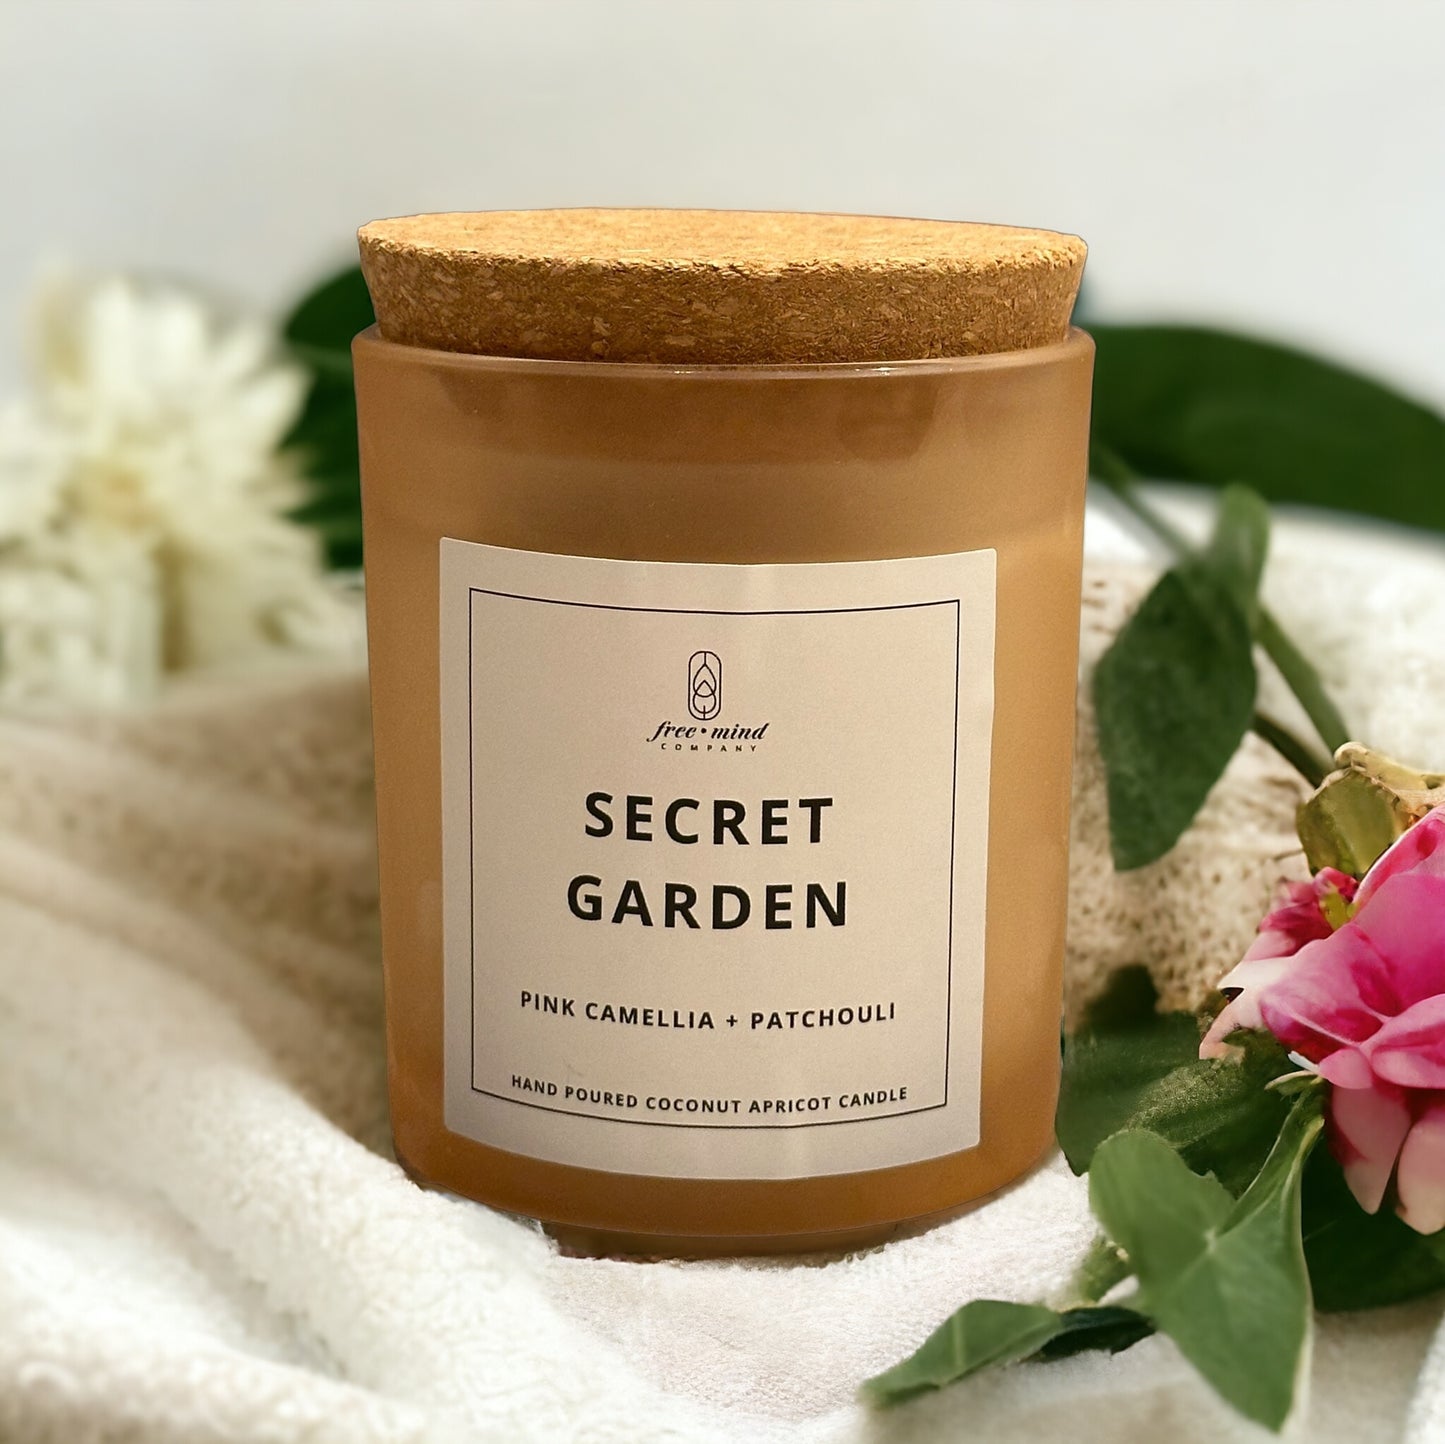 Secret Garden (Pink Camellia + Patchouli)